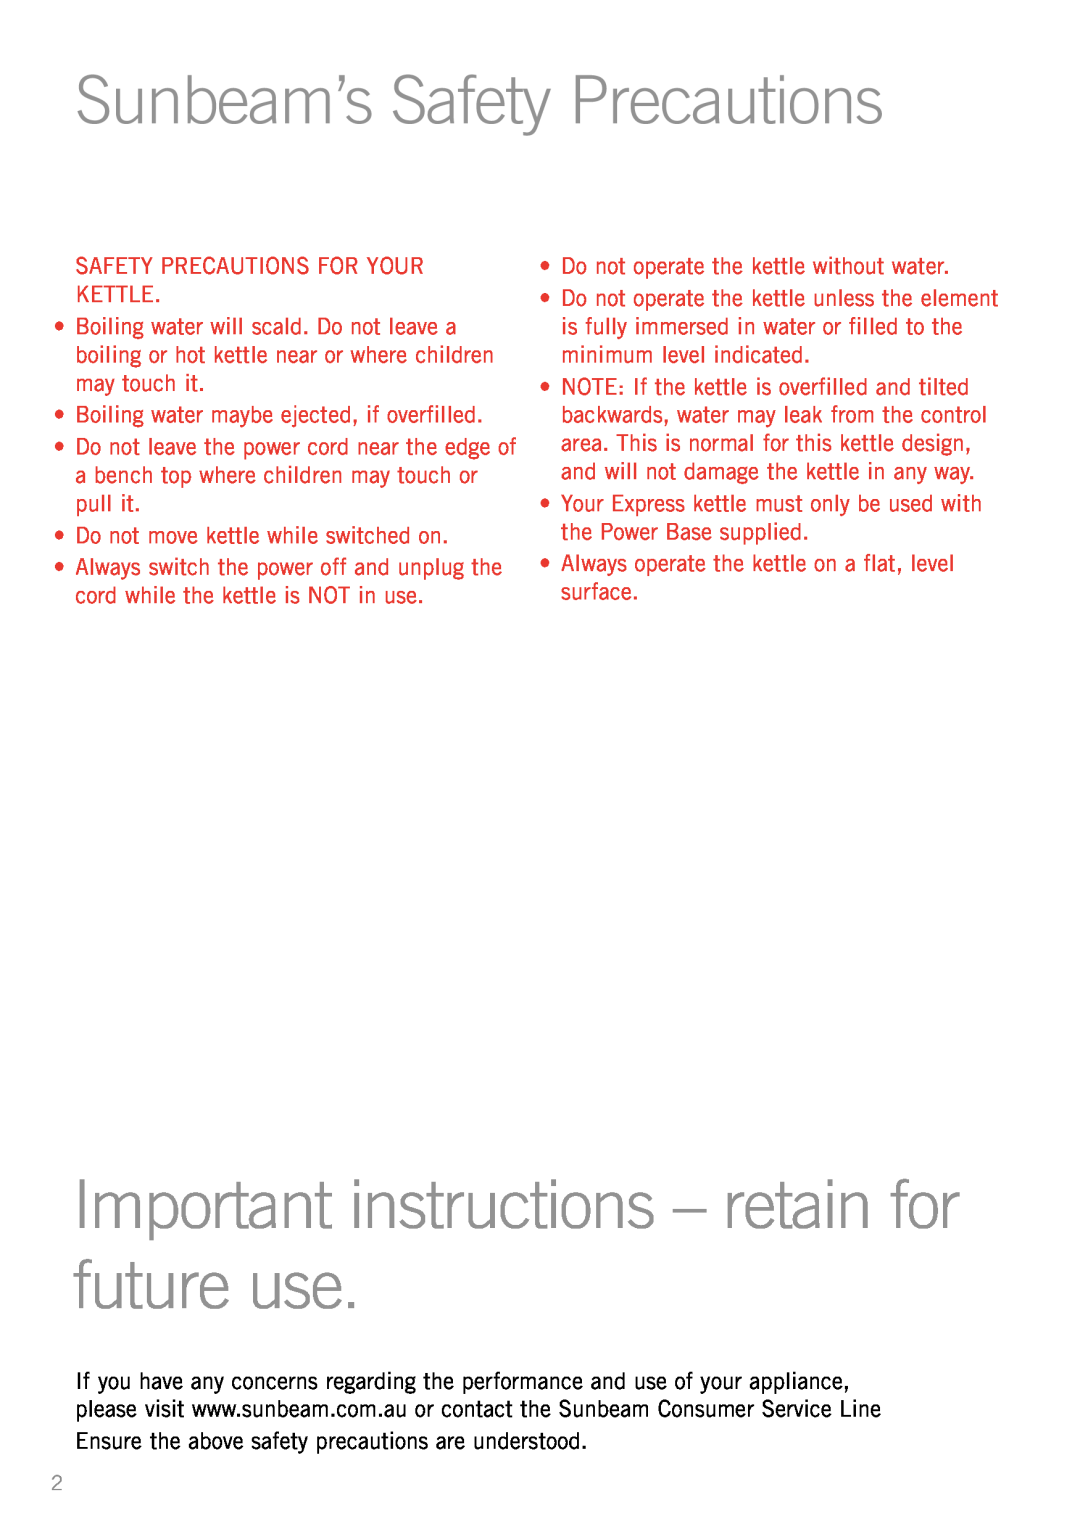 Sunbeam KE2100 manual Sunbeam’s Safety Precautions, Important instructions - retain for future use 